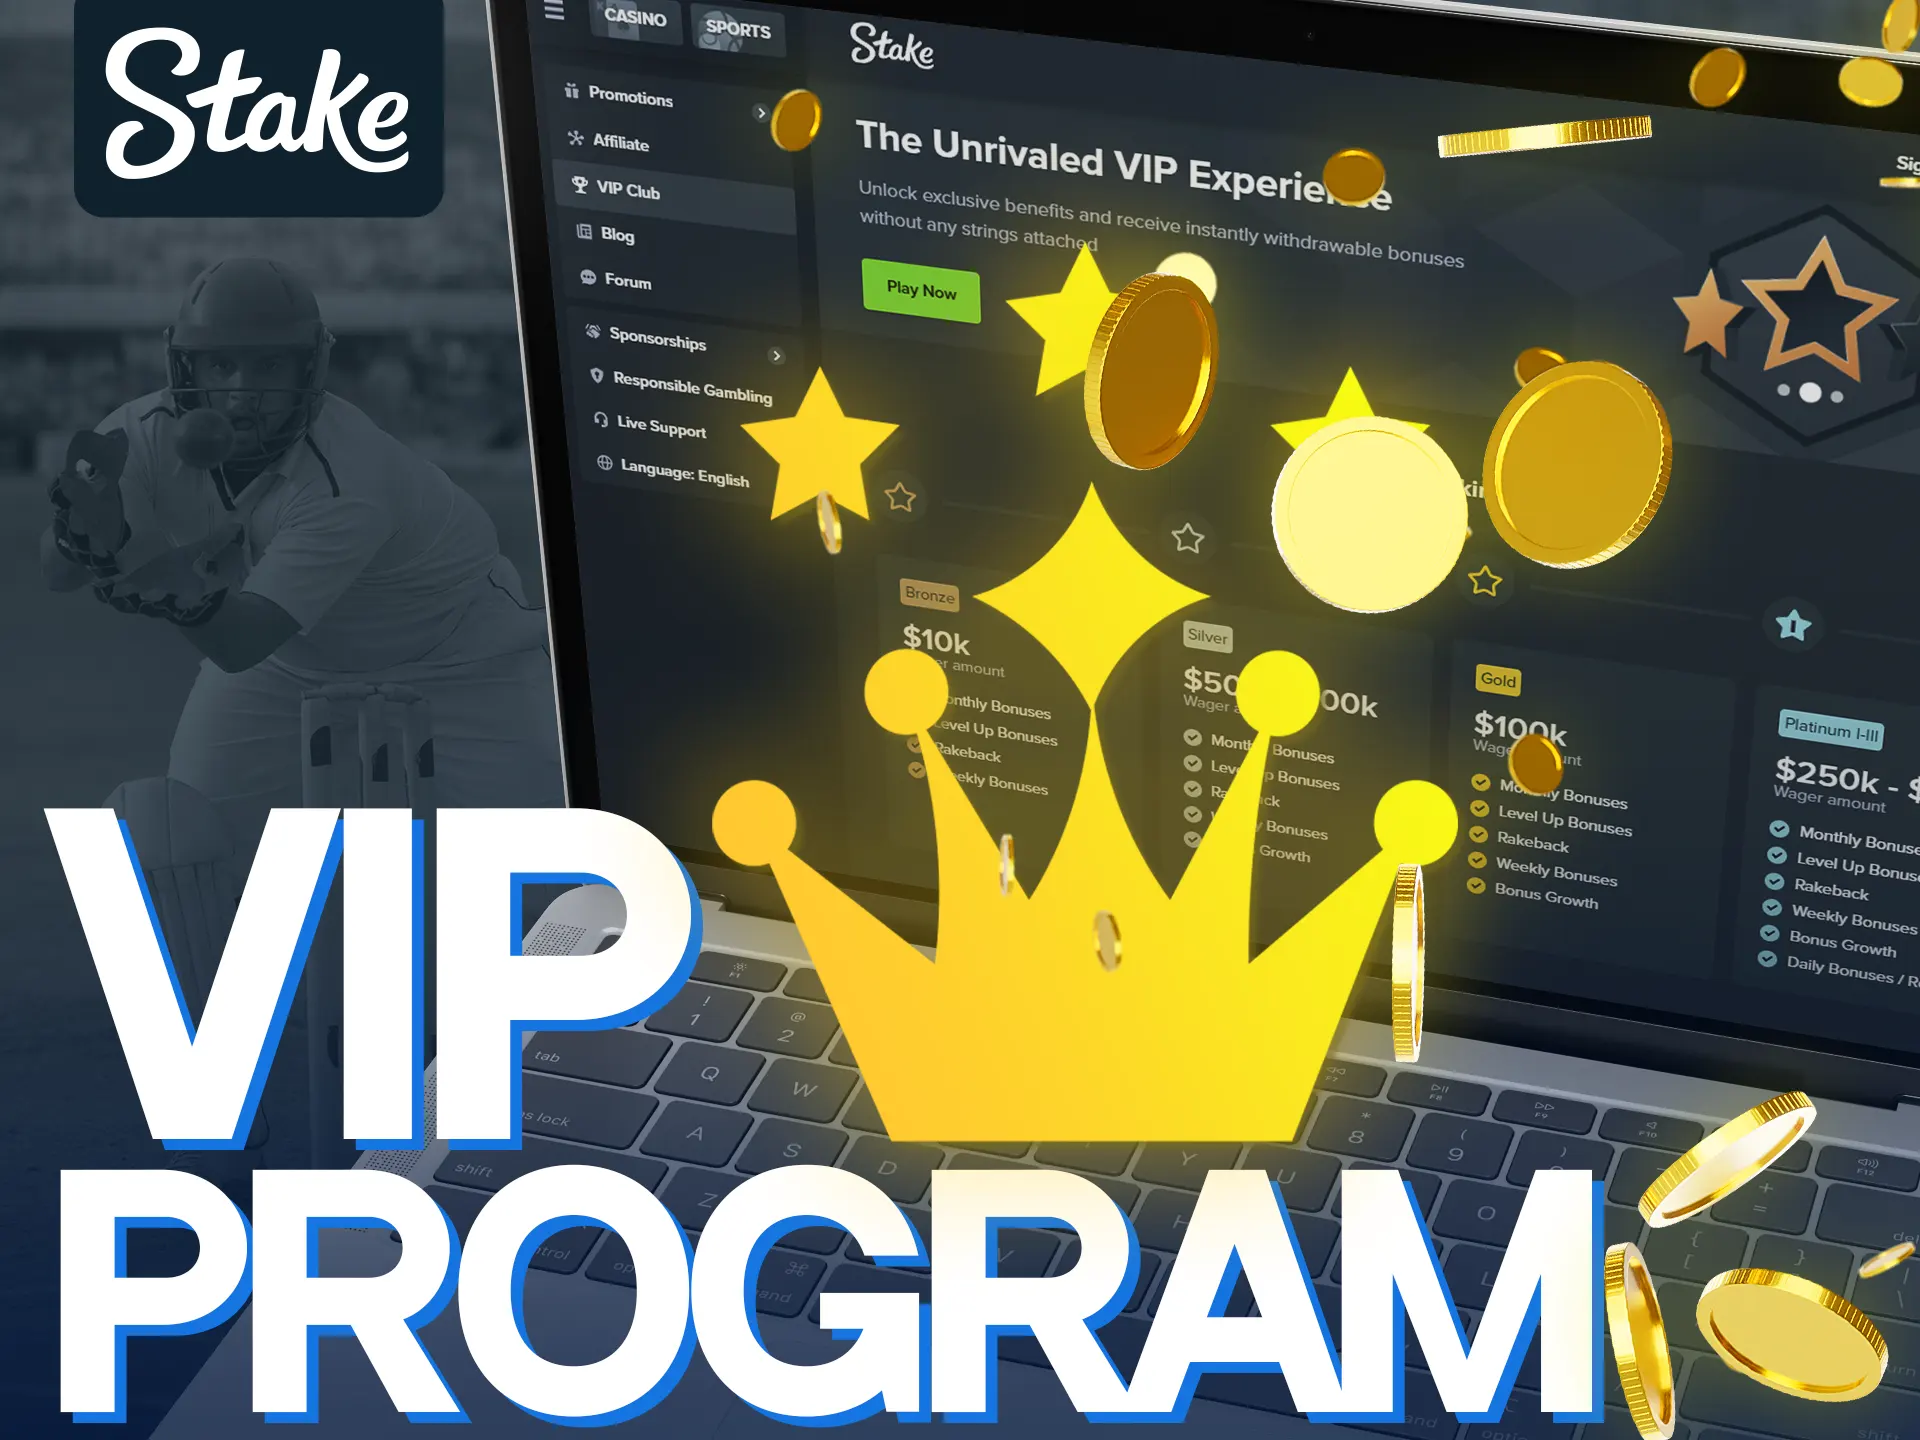 Stake VIP program offers exclusive bonuses and perks.